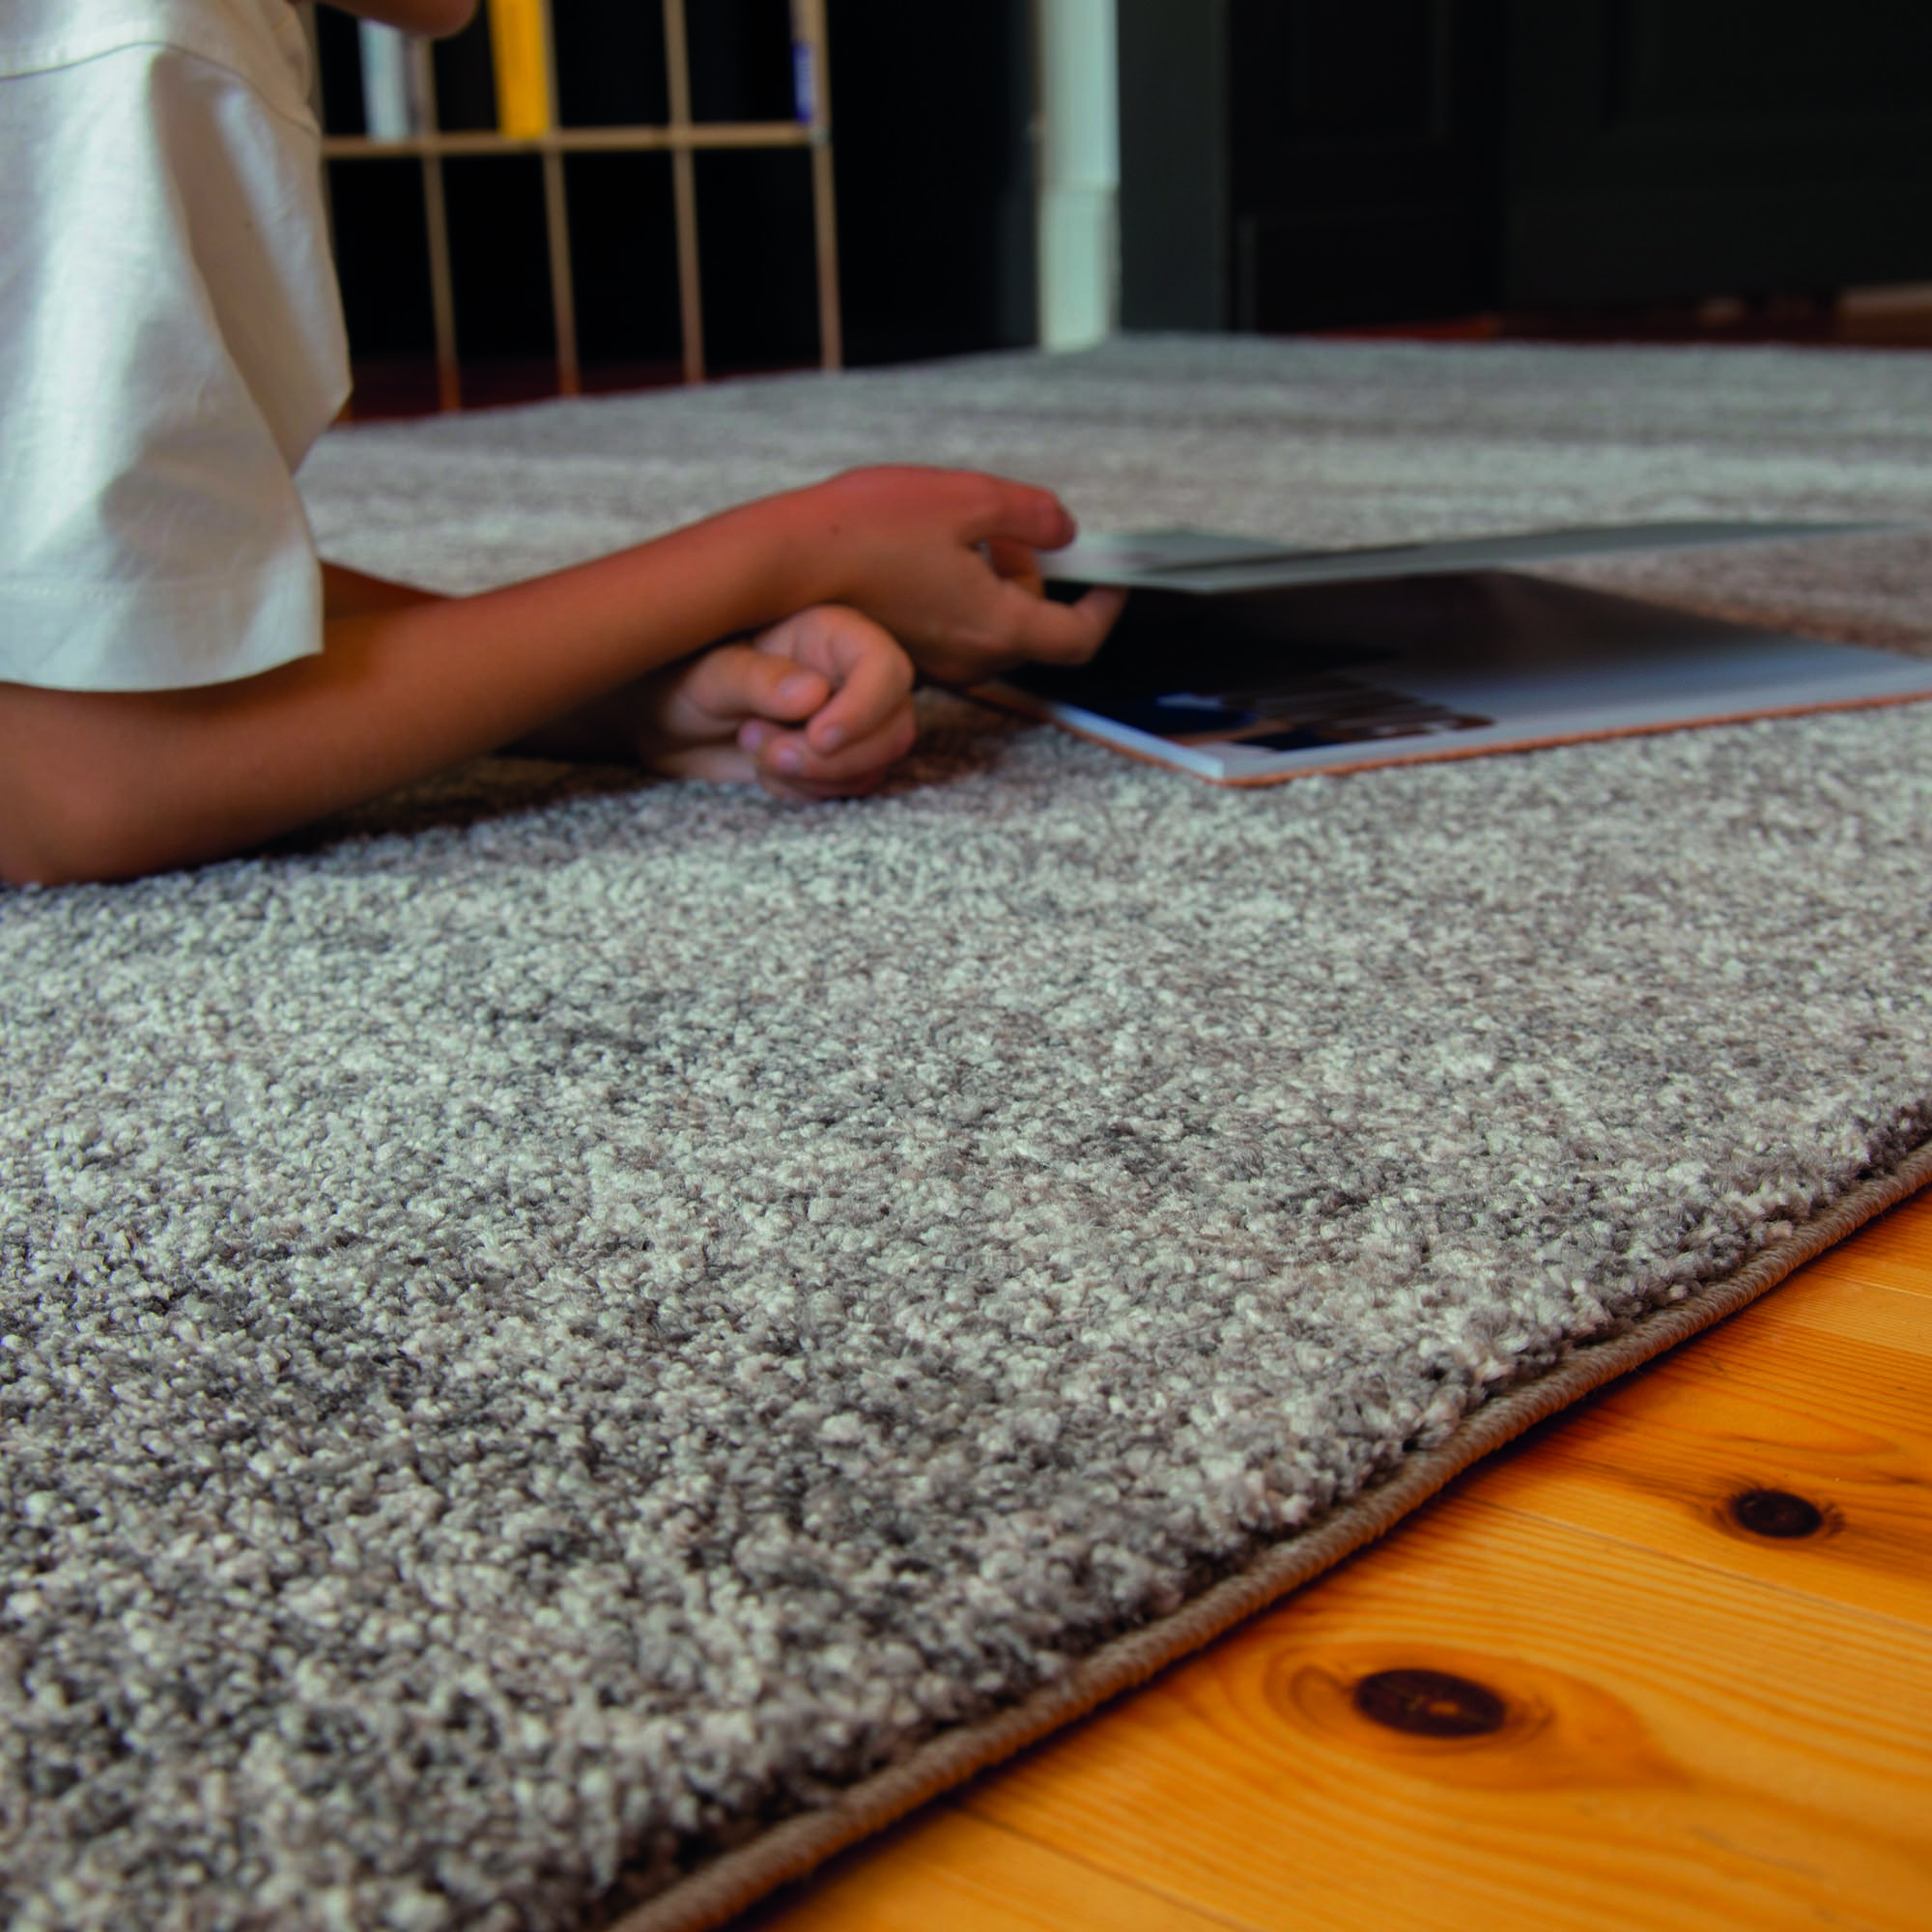 Carpet Furnishings My Nassau grigio Obsession